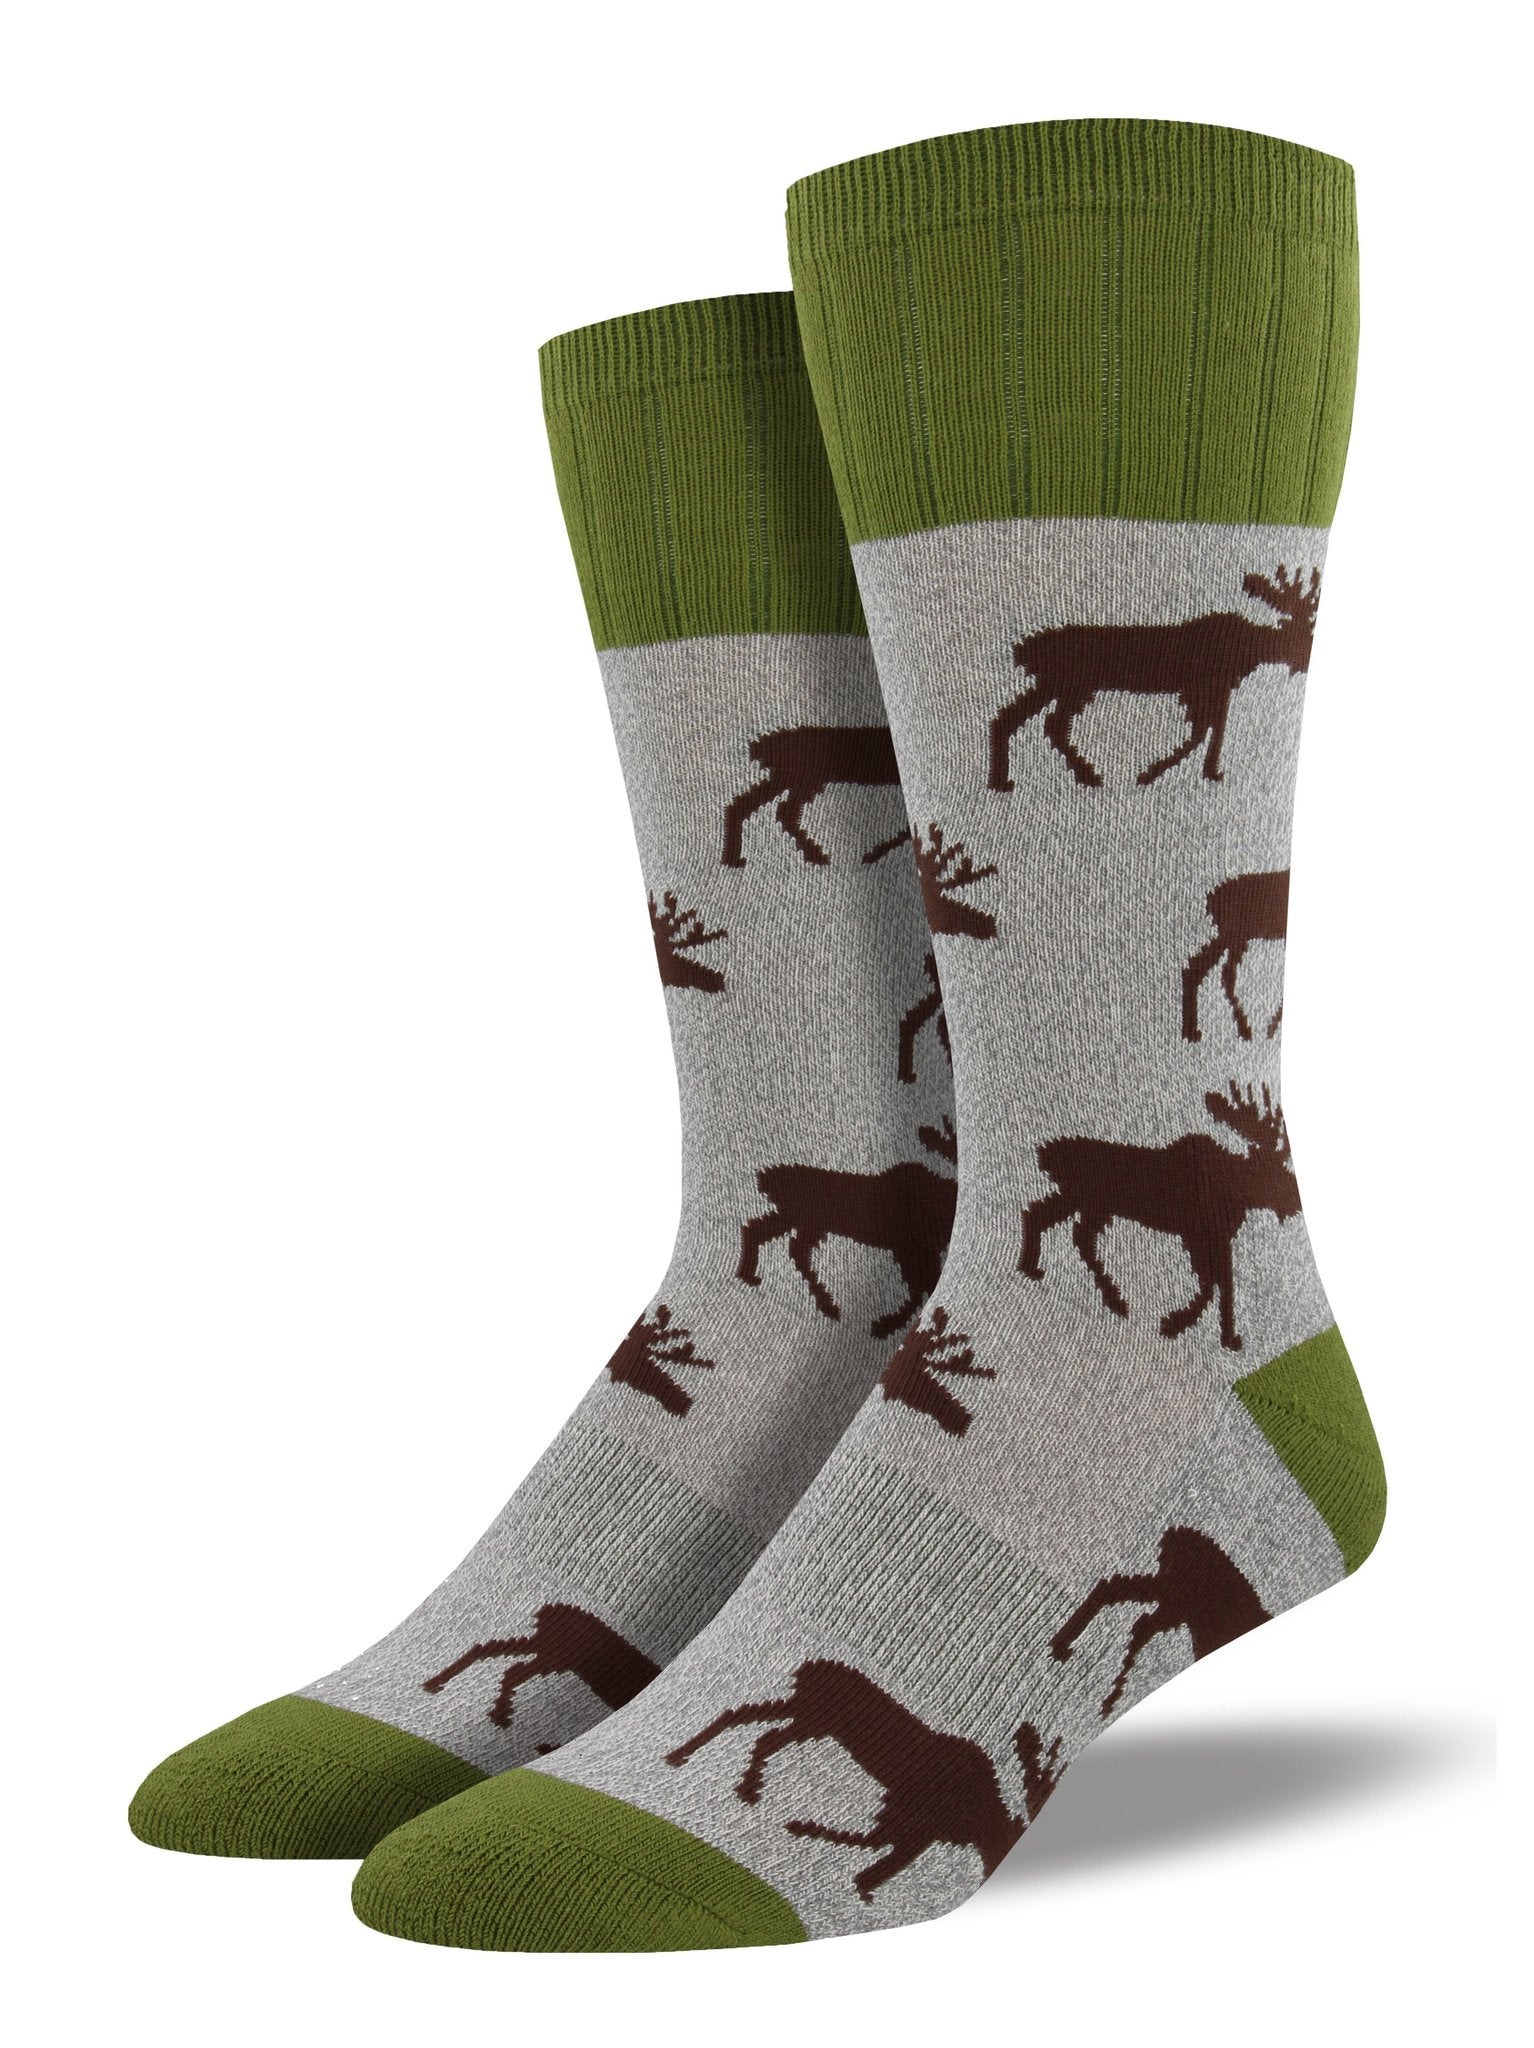 Outlands Men's Moose Socks